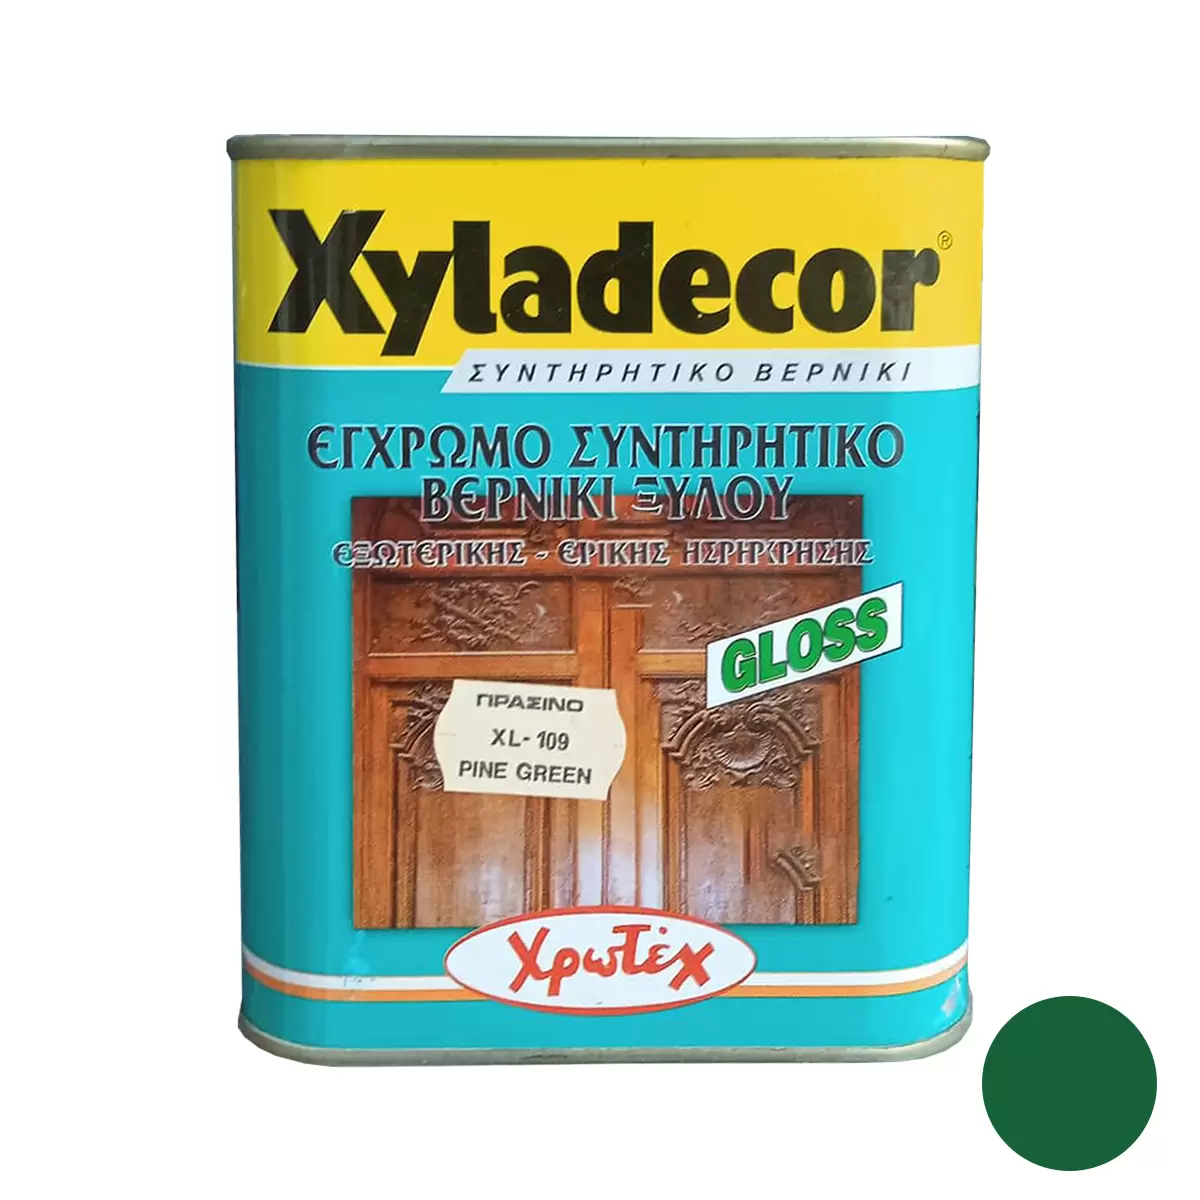 XYLADECOR GLOSS  XL-109 PINE GREEN 750ML